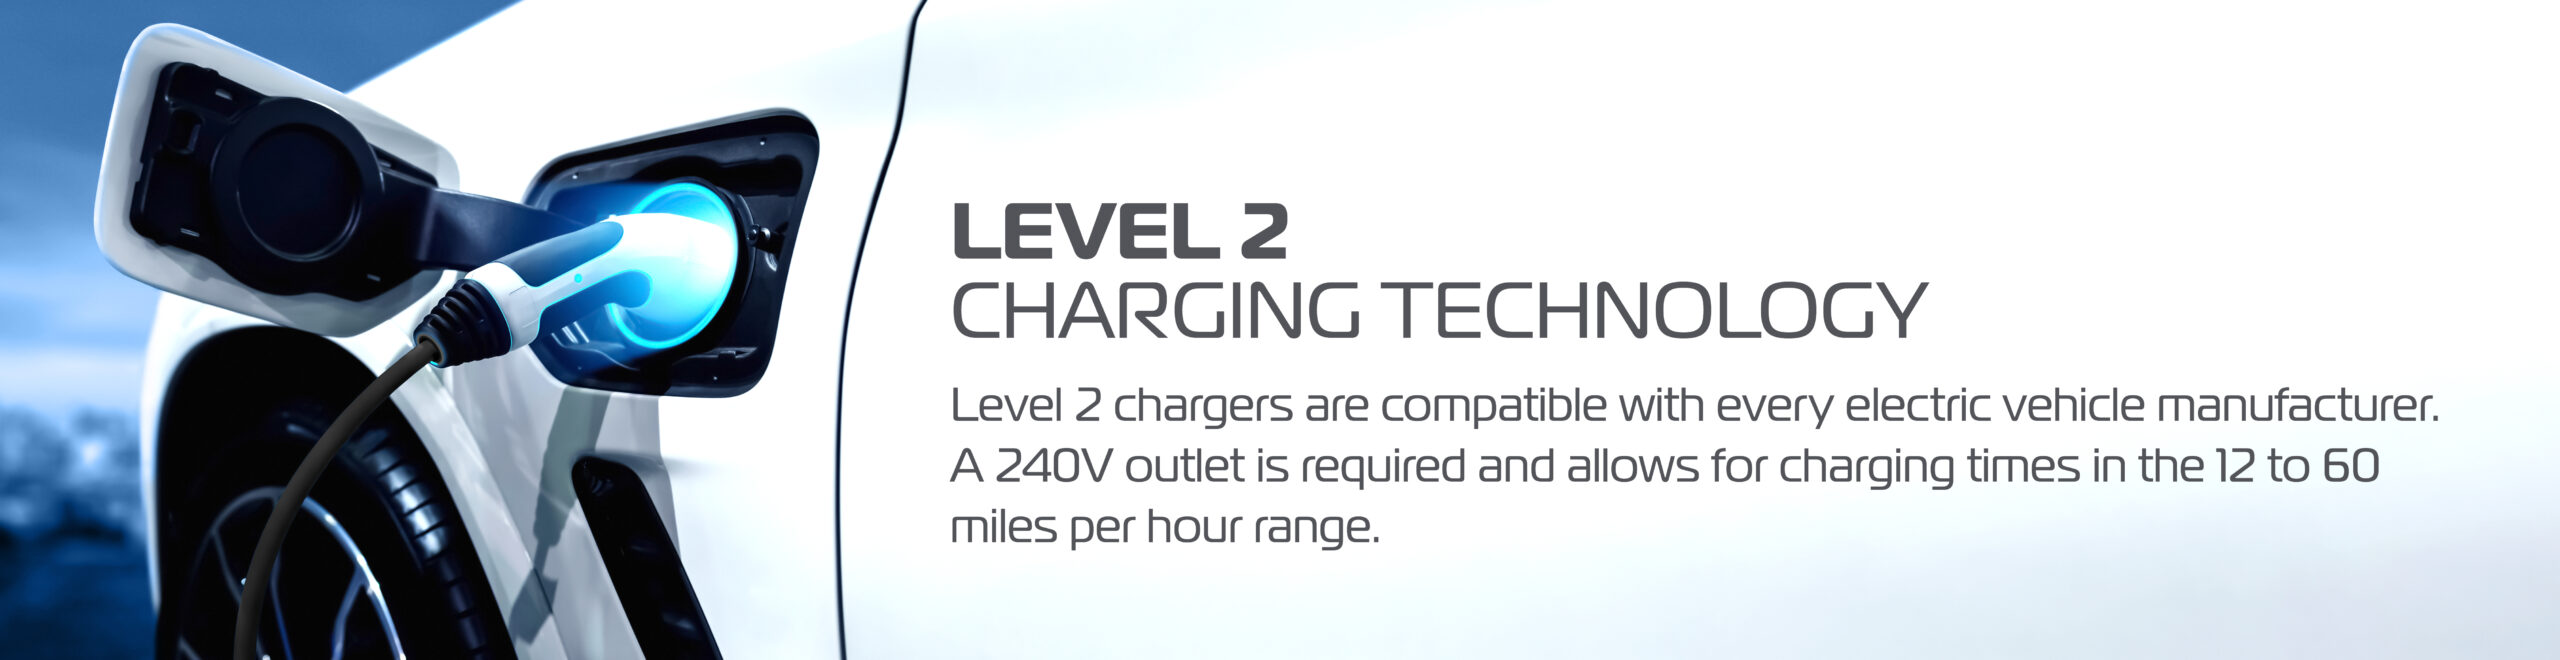 level 2 charging technology